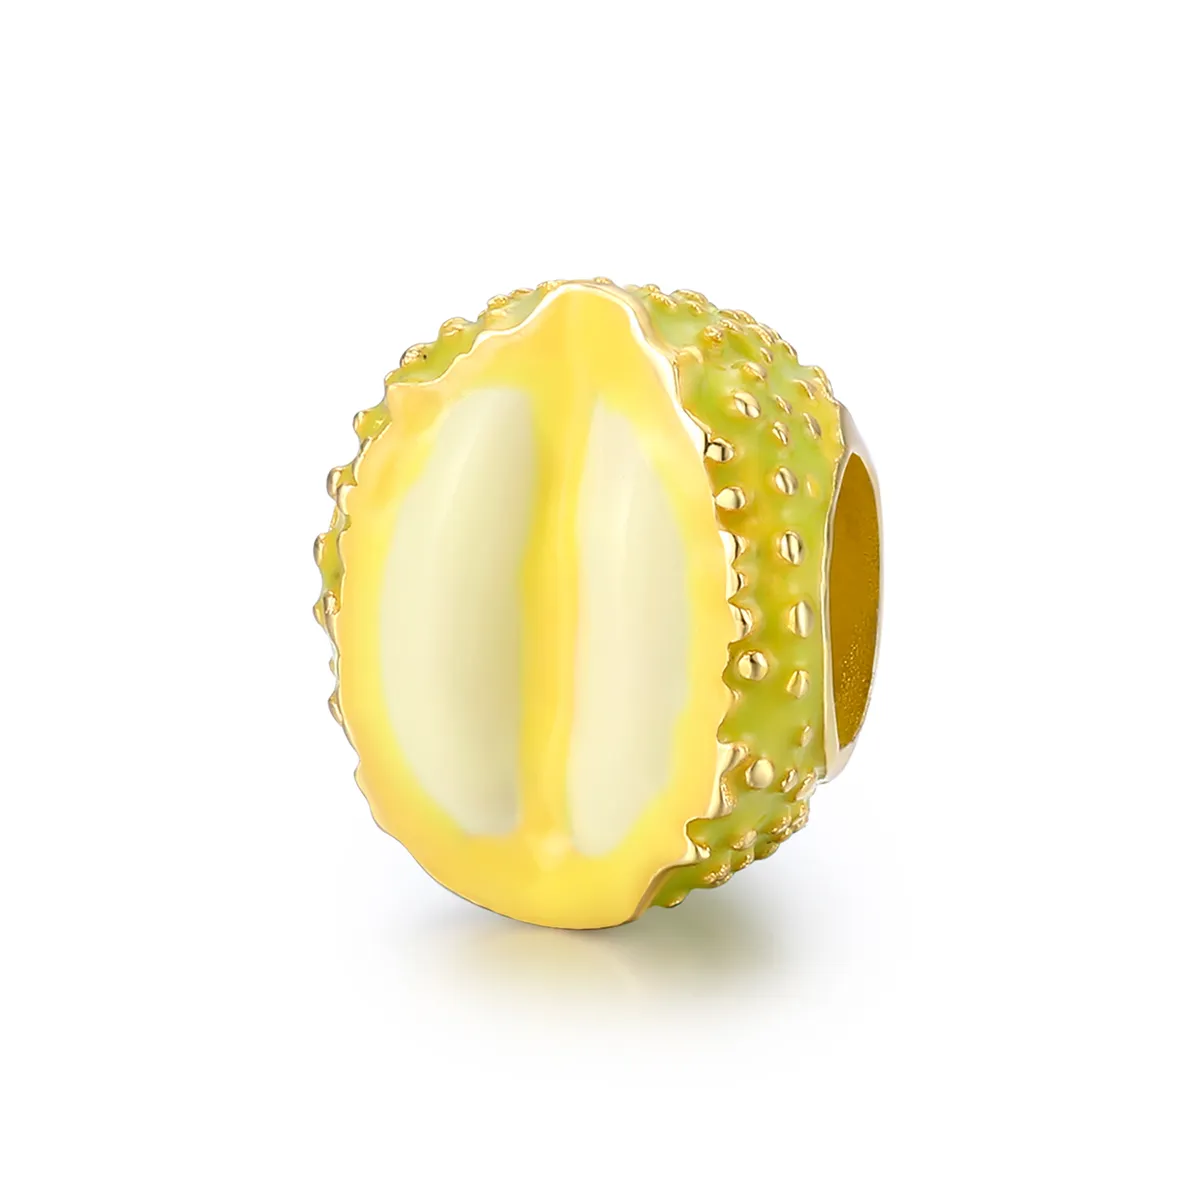 charma durian de tip pandora bsc402